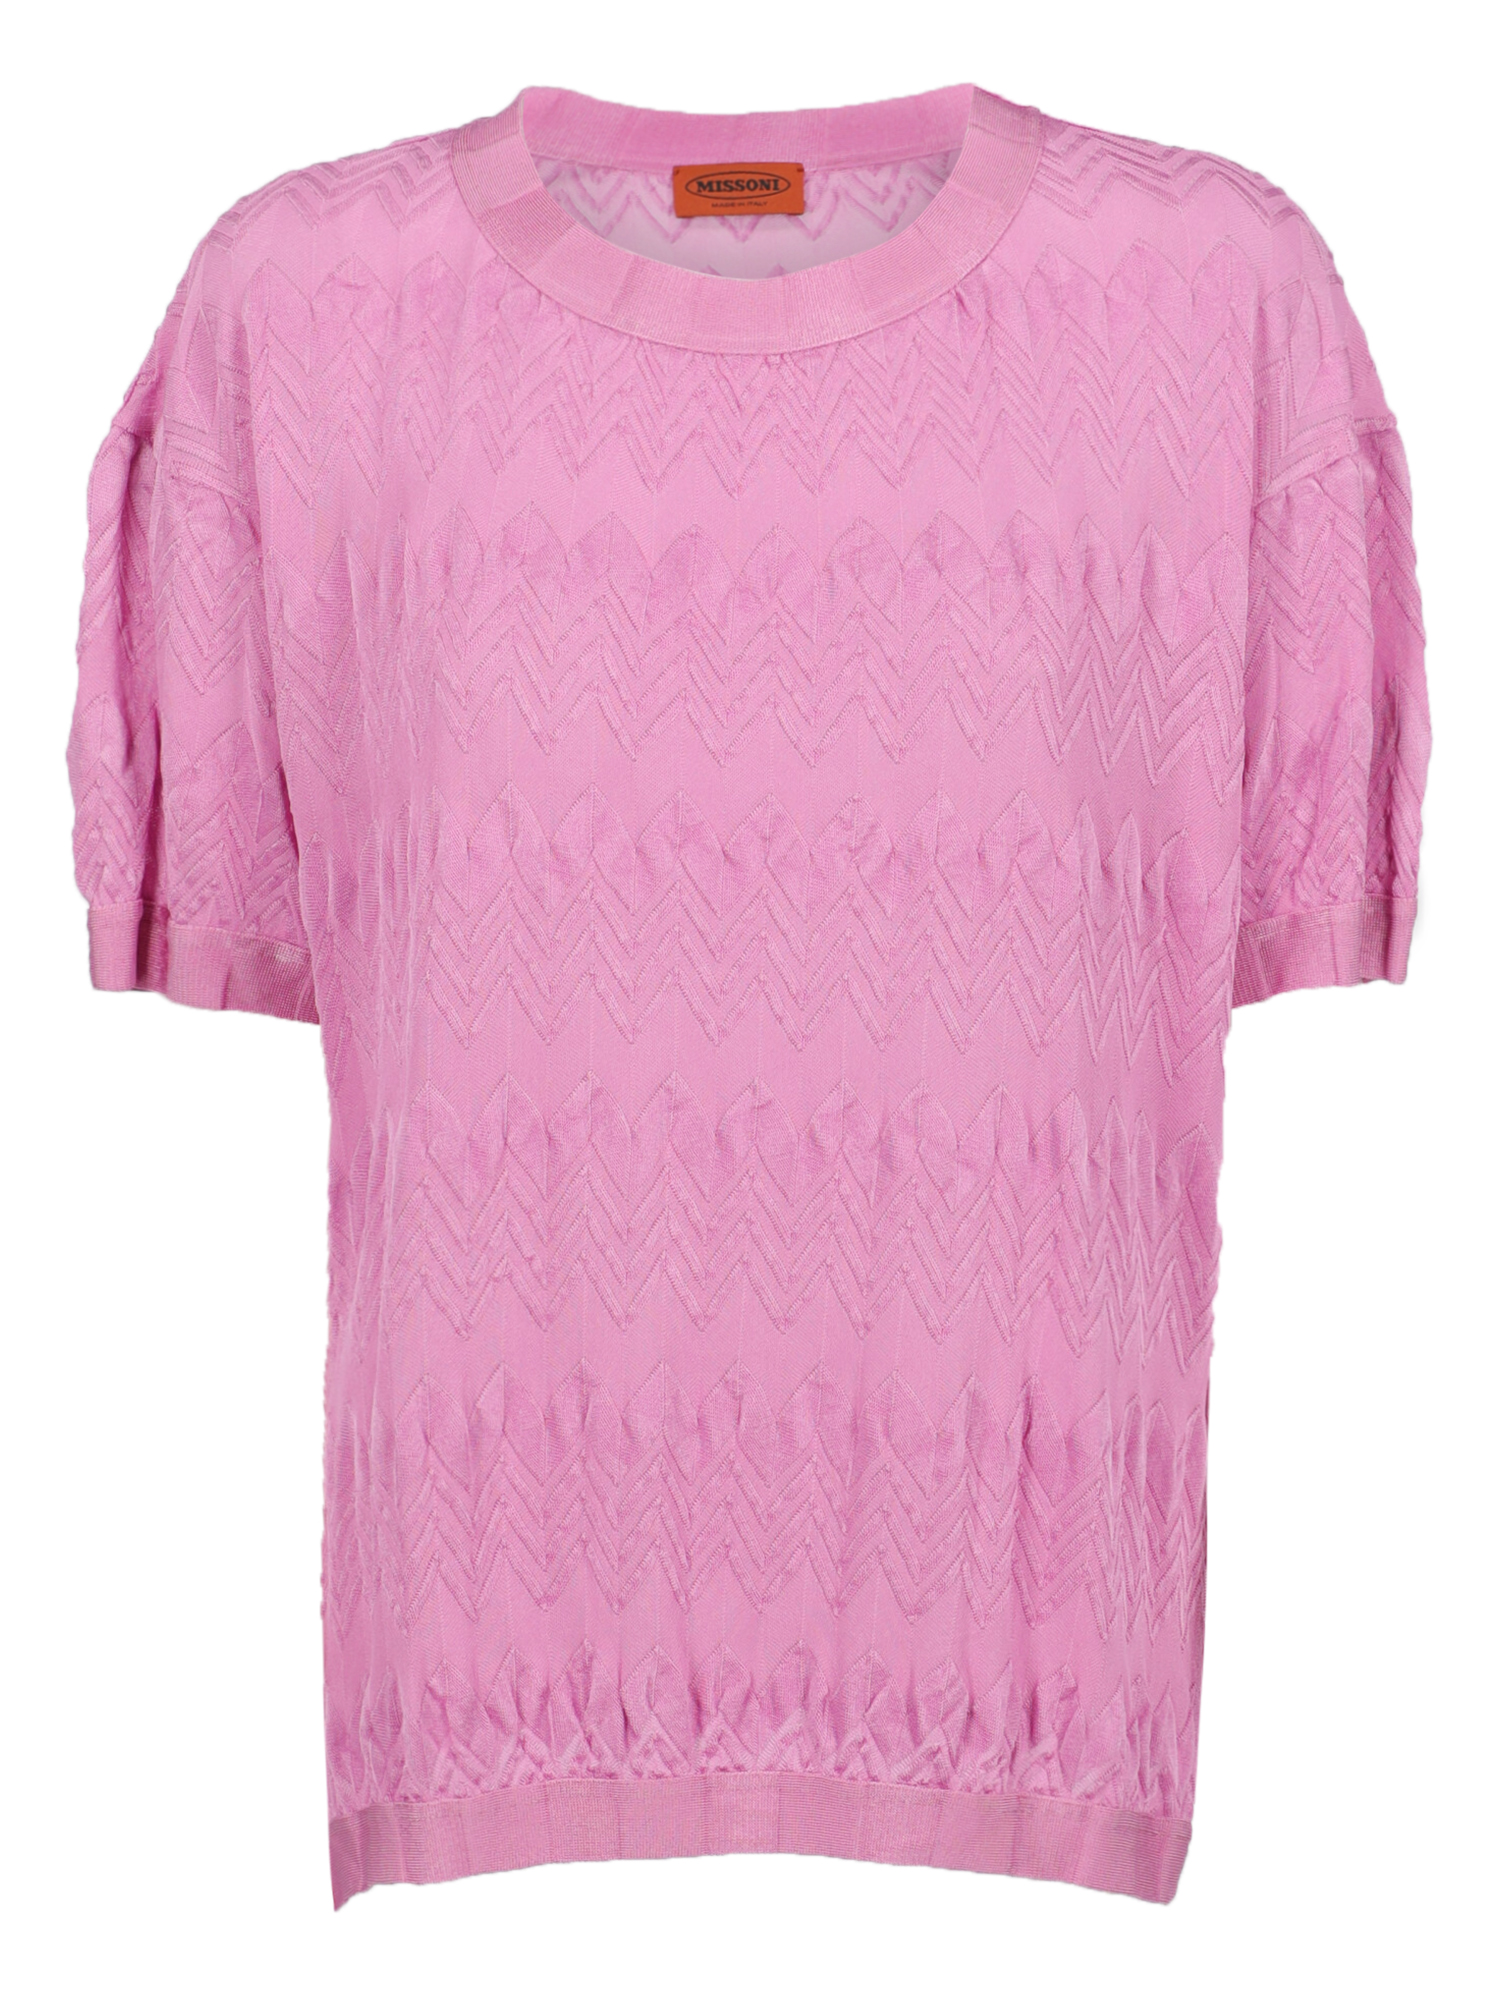 Missoni Femme T-shirts et tops Pink Synthetic Fibers